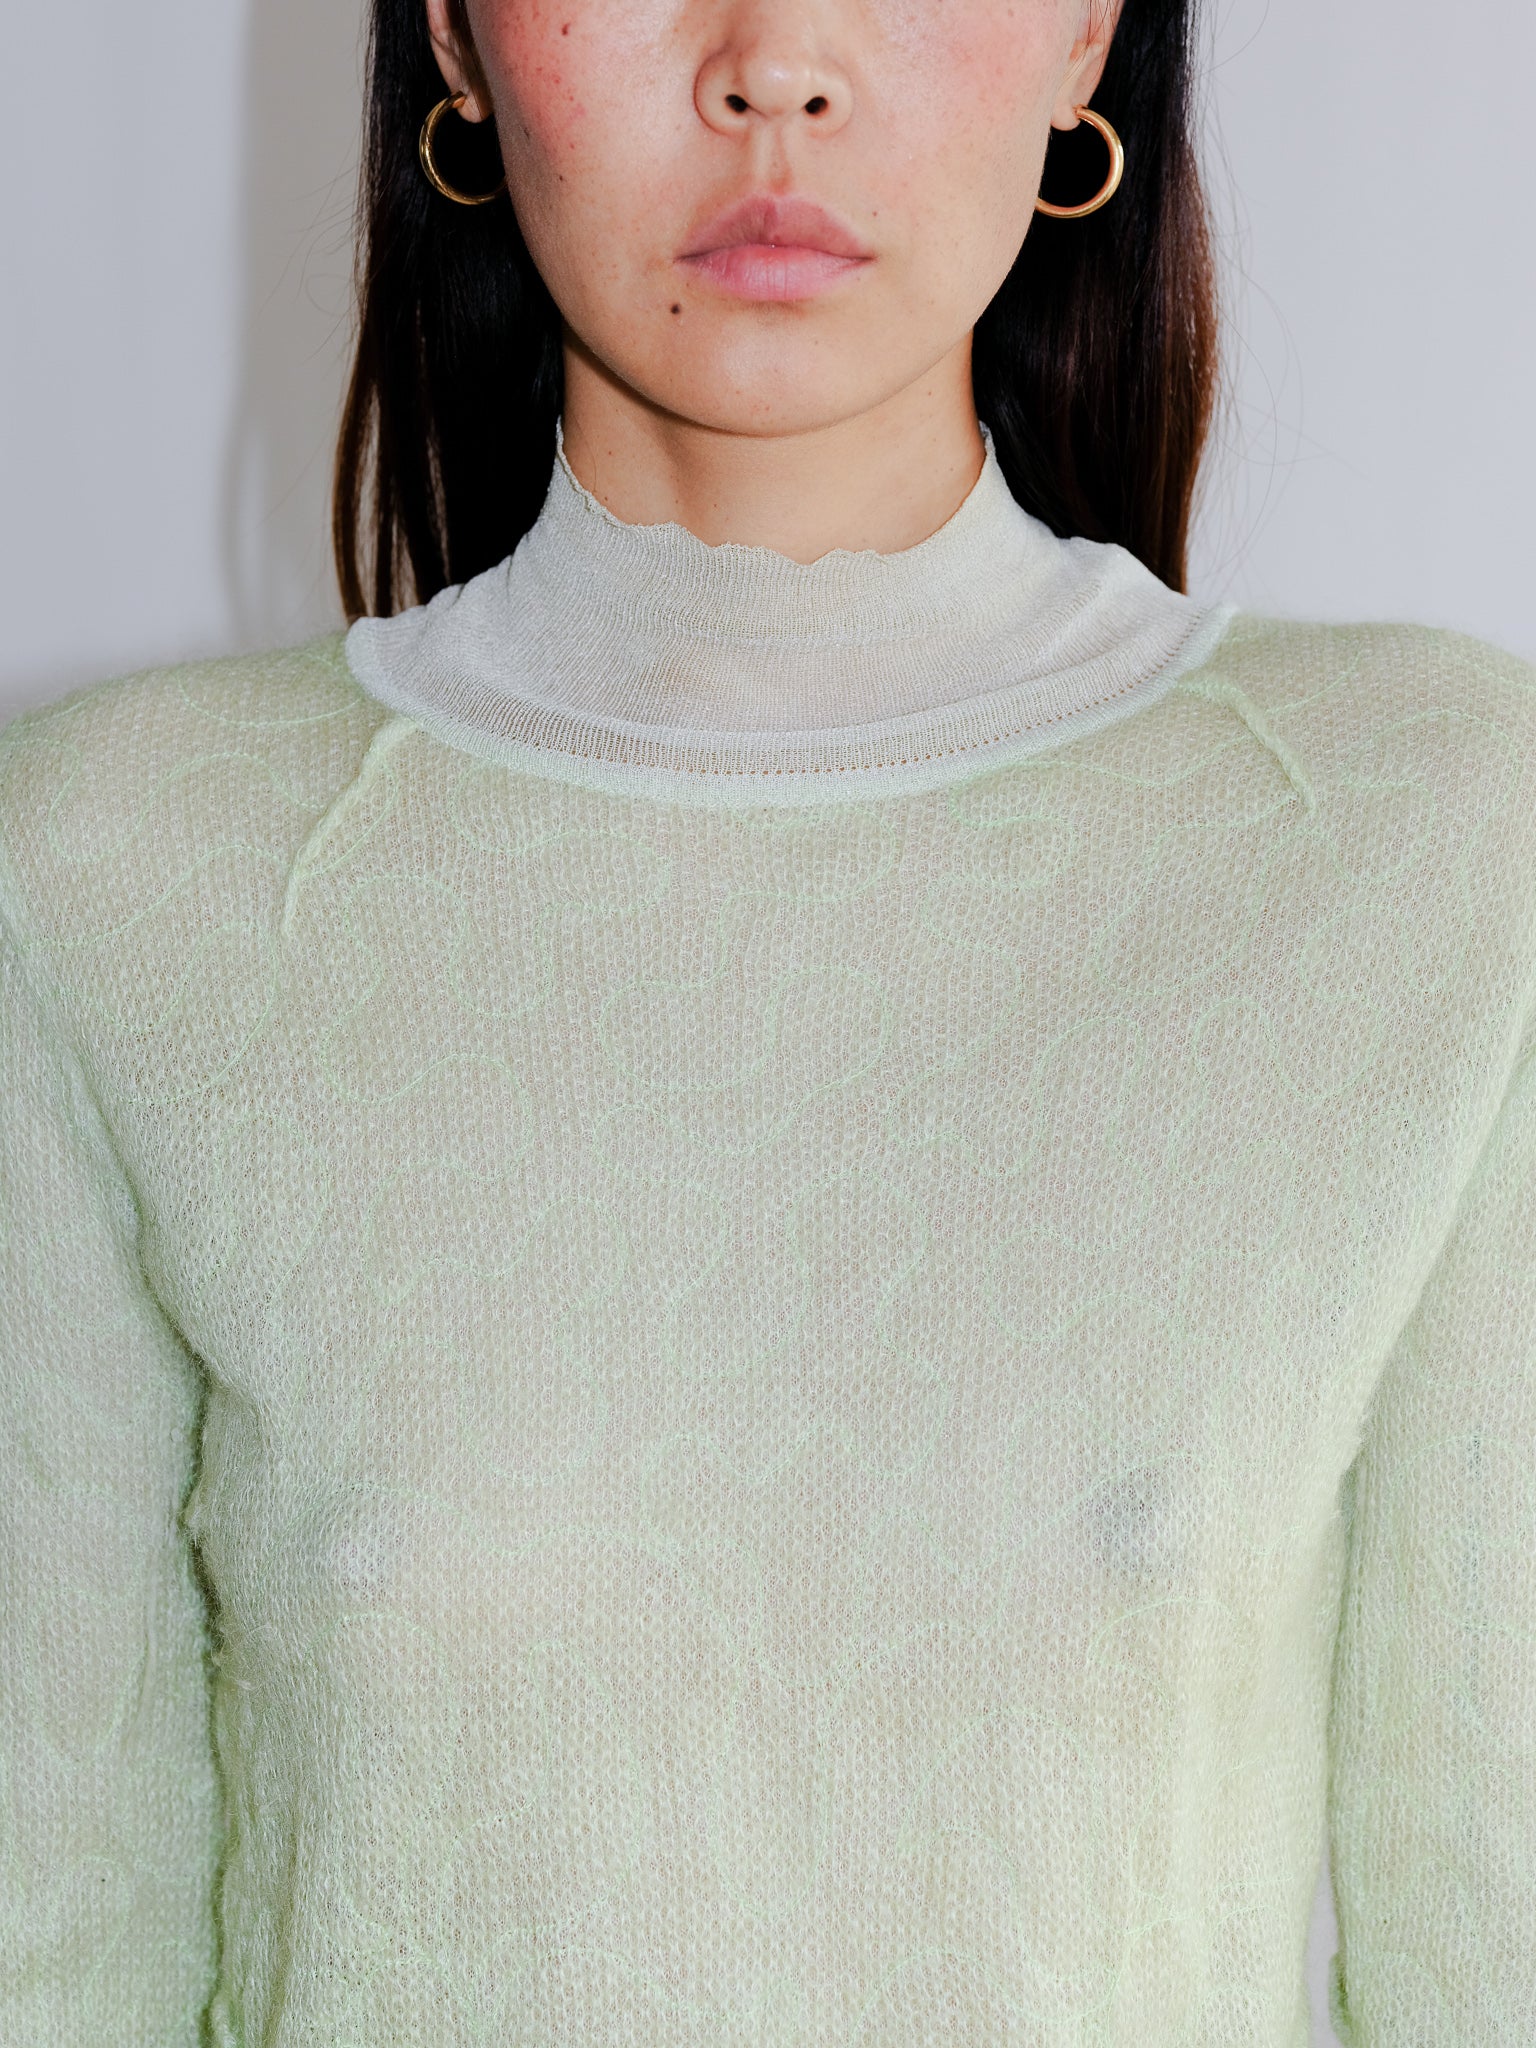 Christian Dior sweater